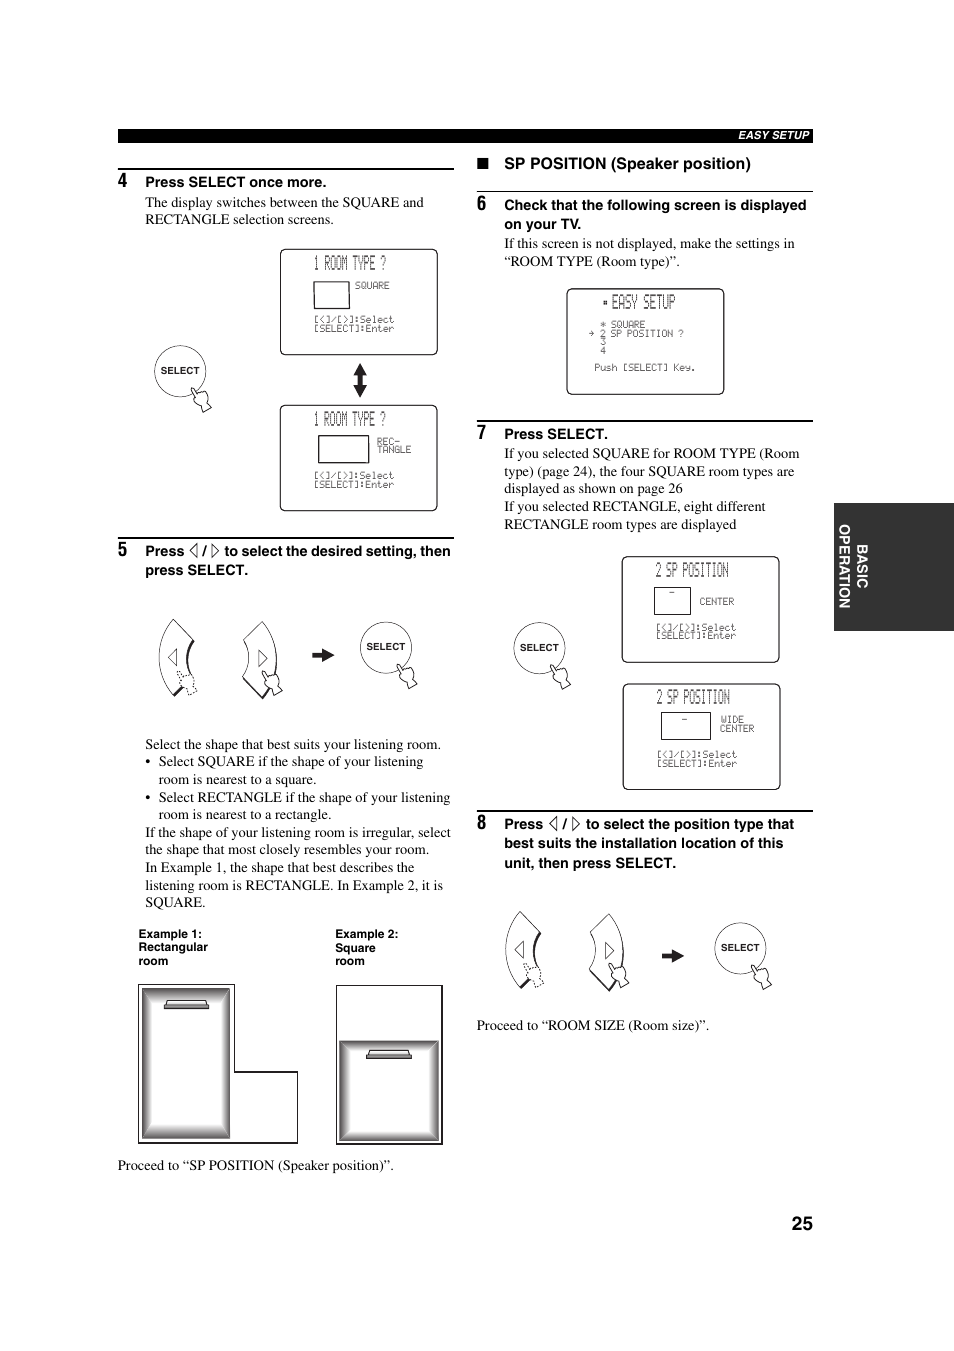 1 room type, Easy setup, 2 sp position | Yamaha YSP-1 User Manual